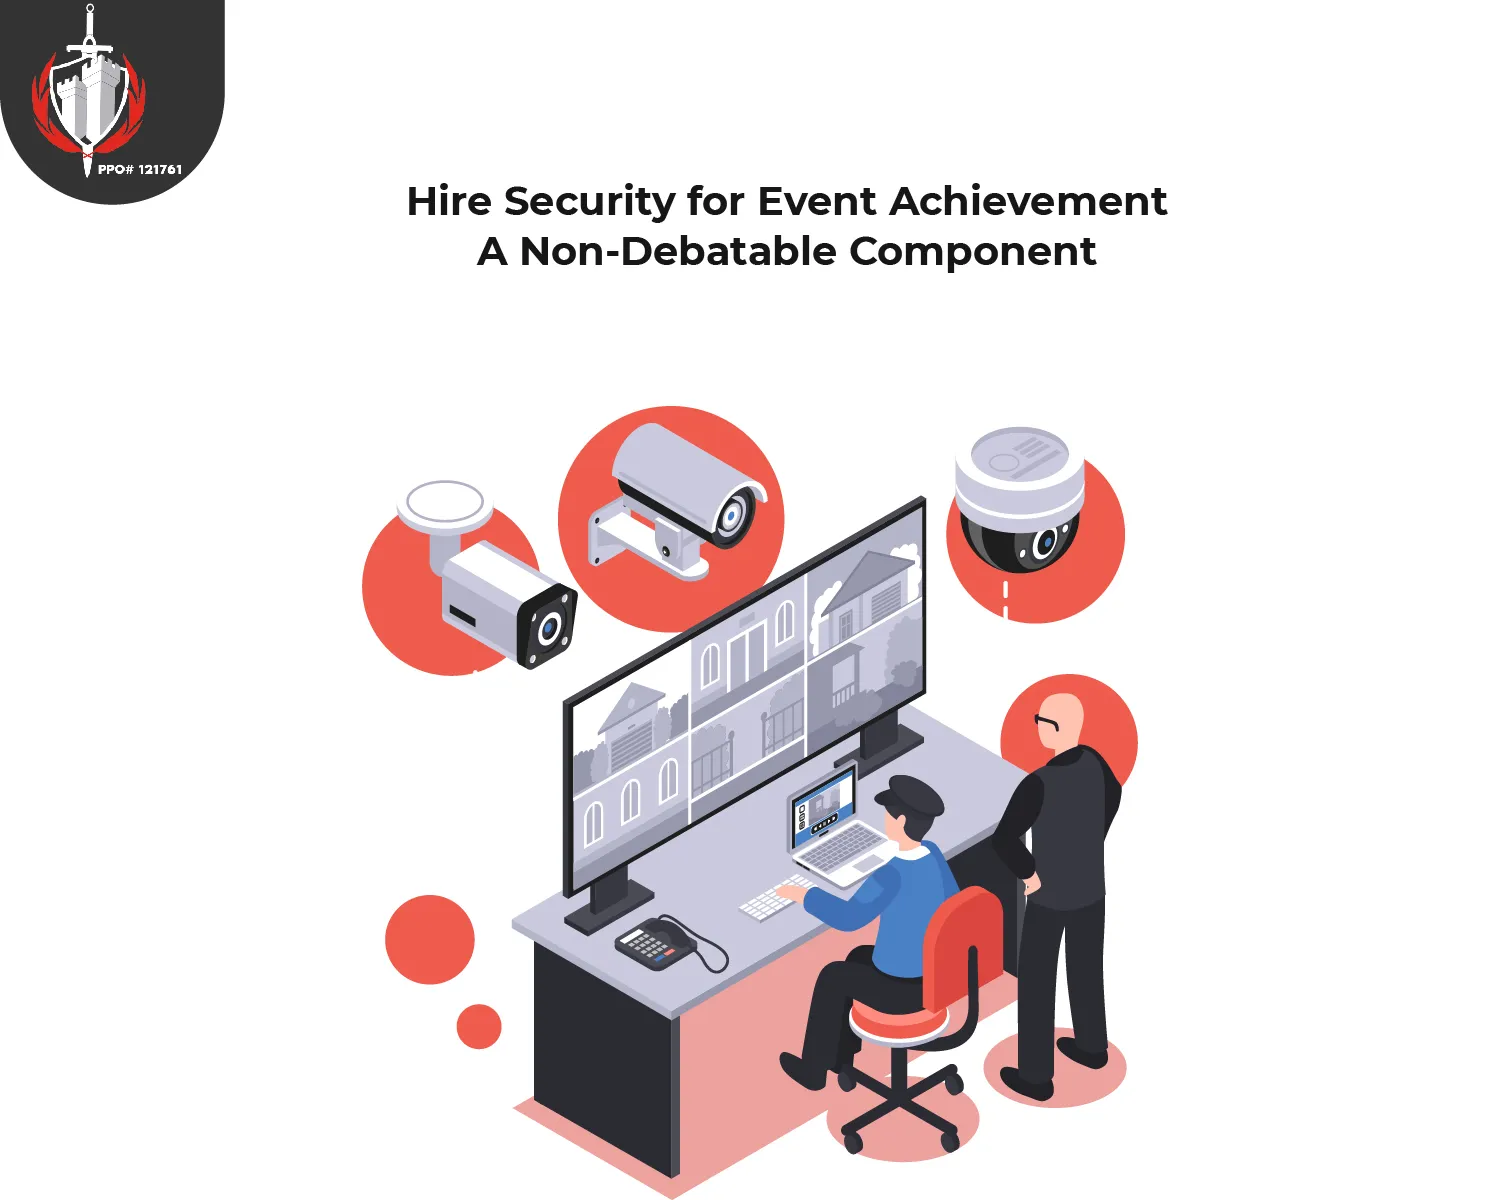 Hire Security for Event Achievement: A Non-Debatable Component